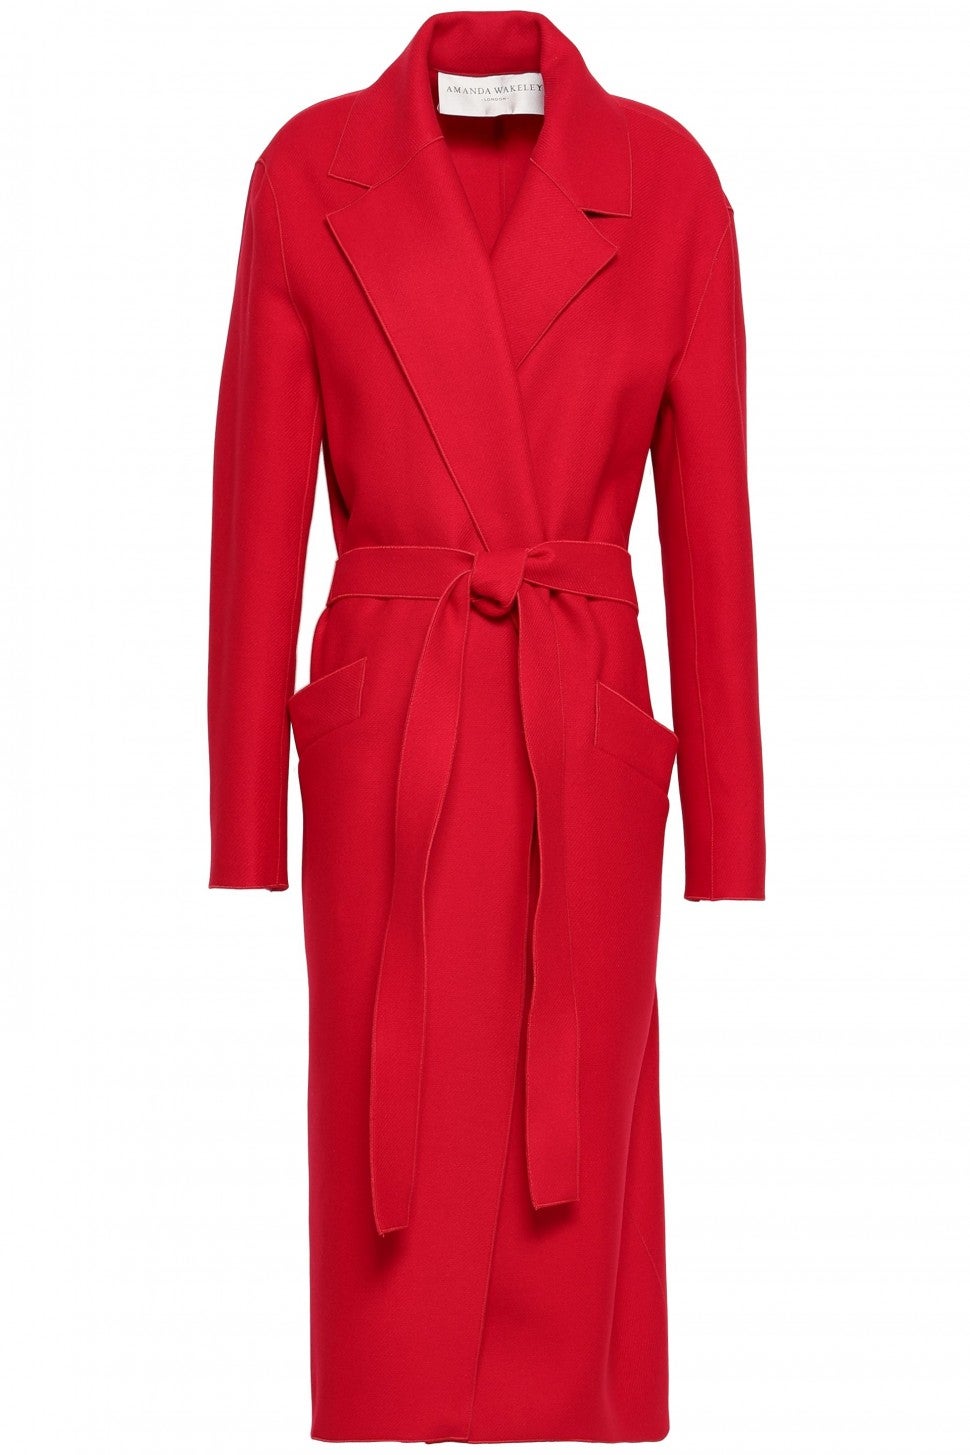 Amanda Wakeley red belted coat